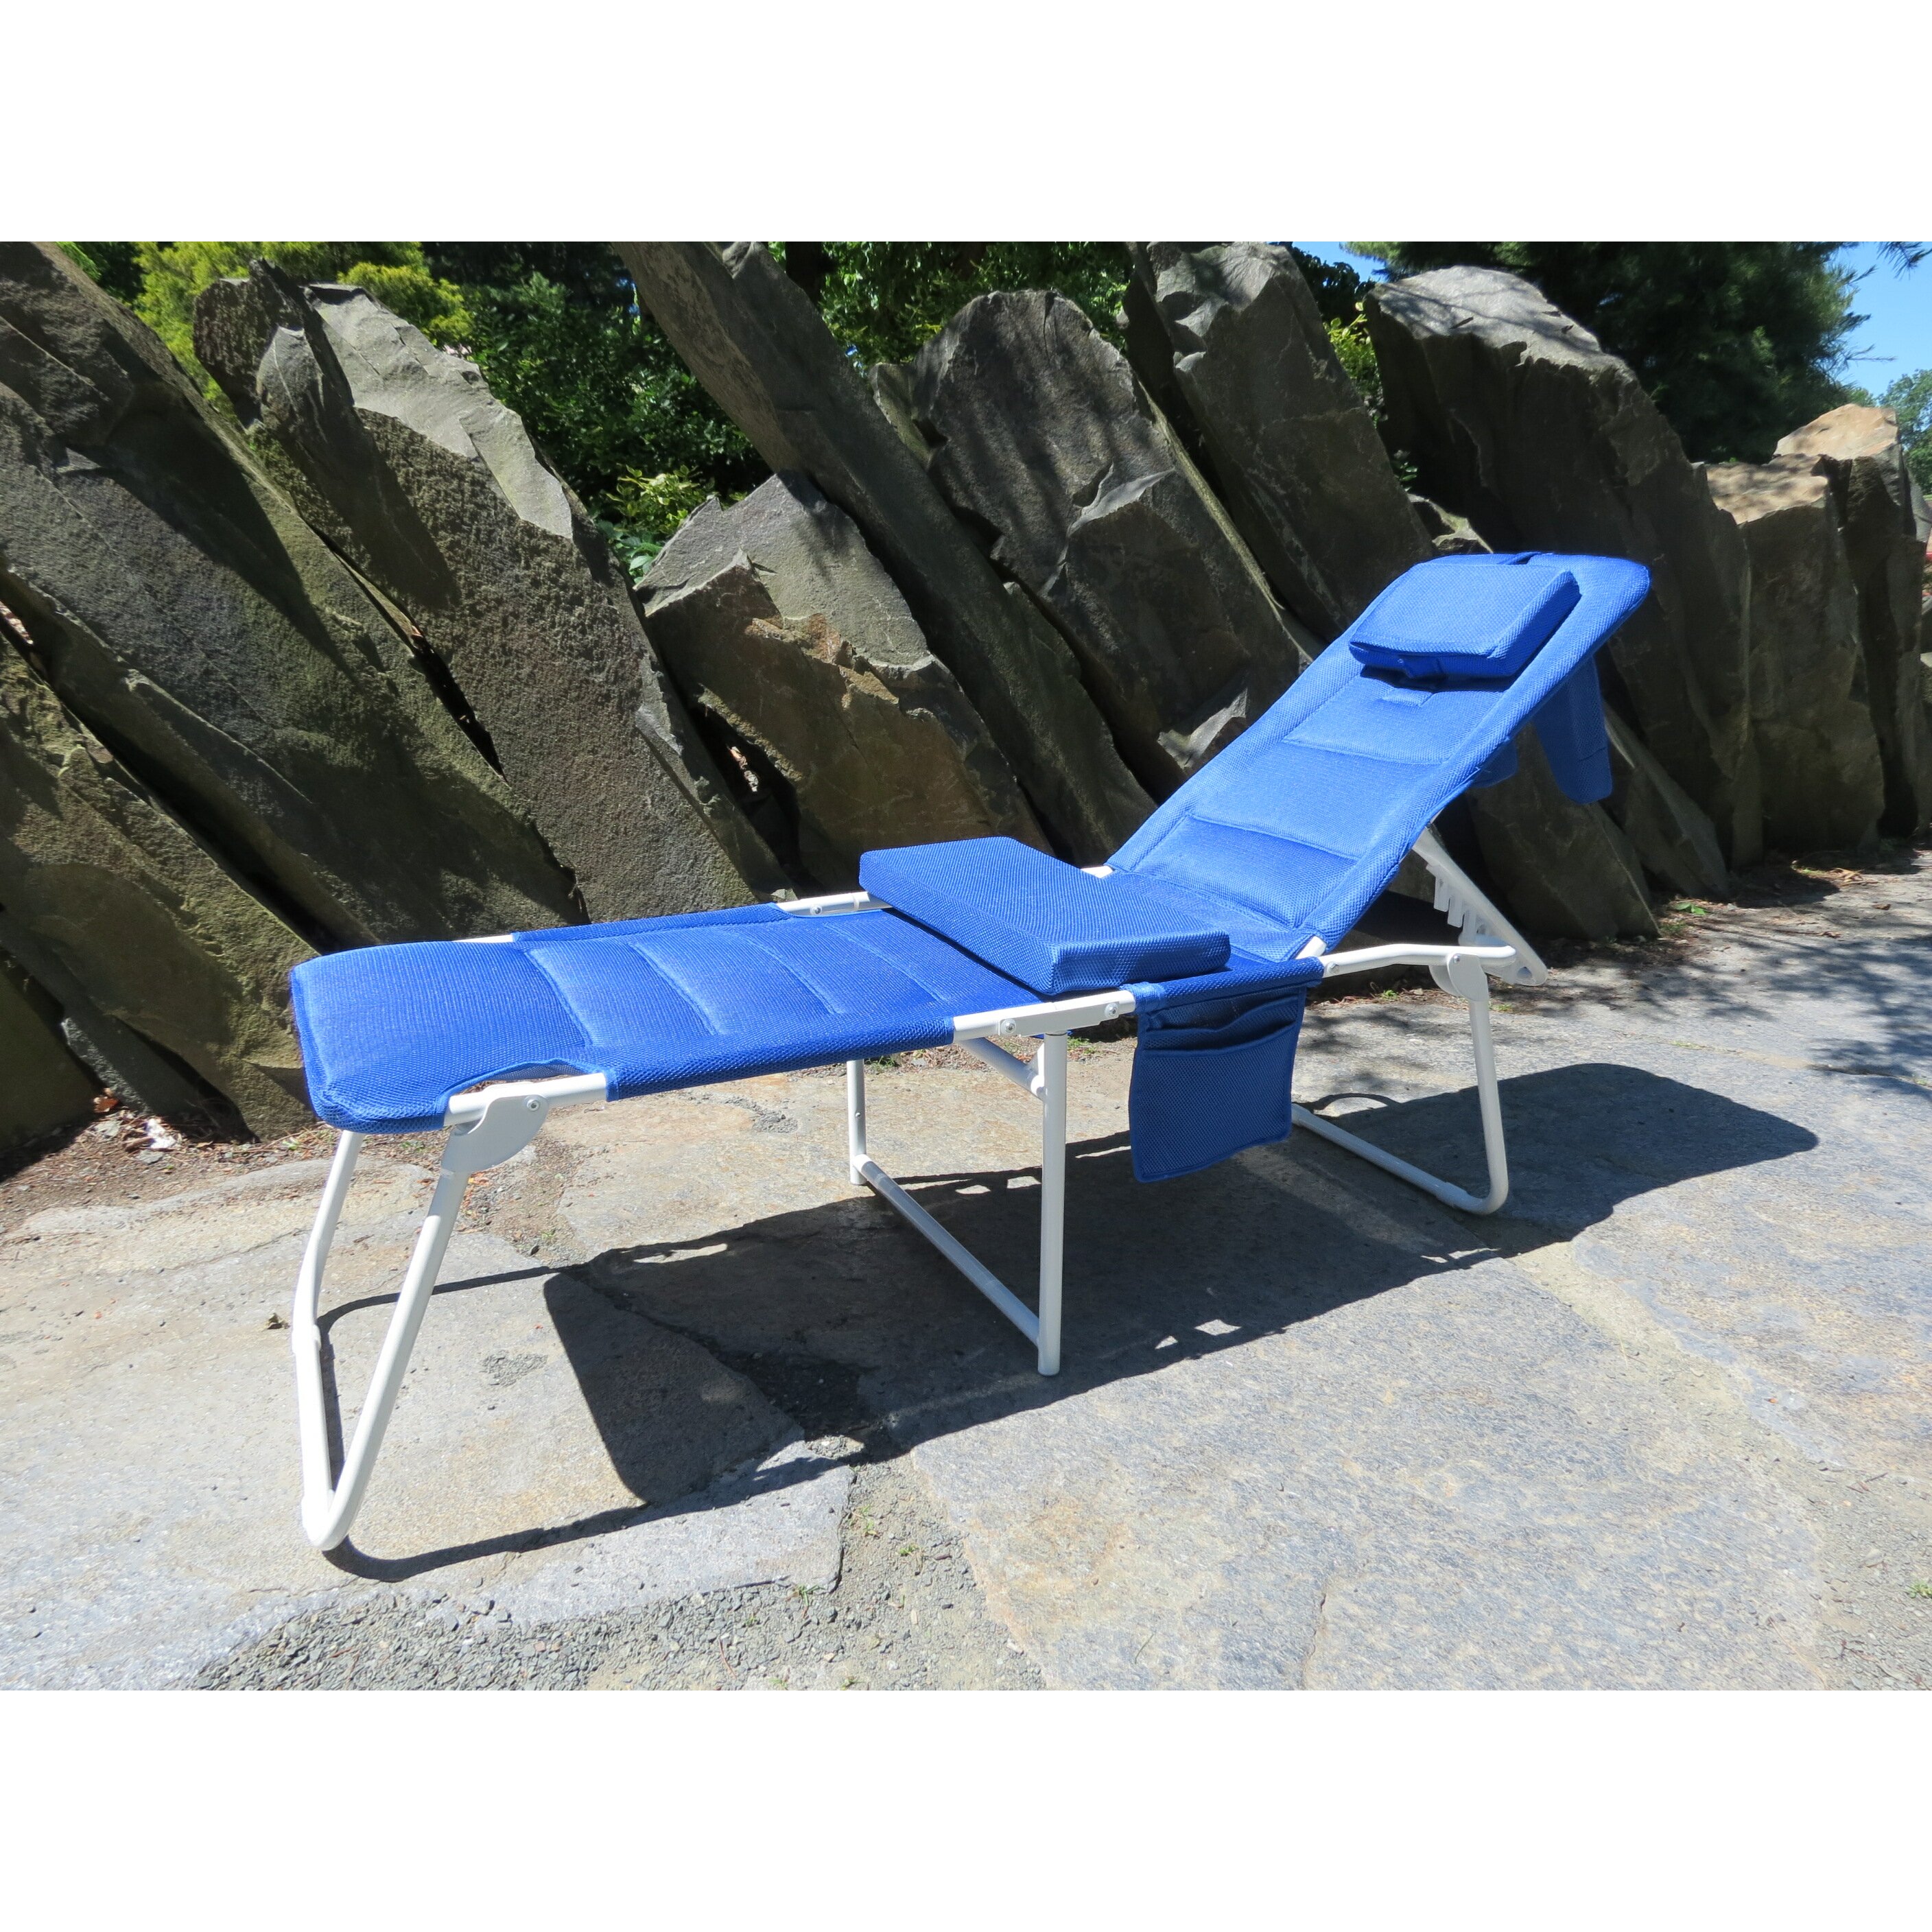 New Beach Lounge Chair Cushions for Simple Design